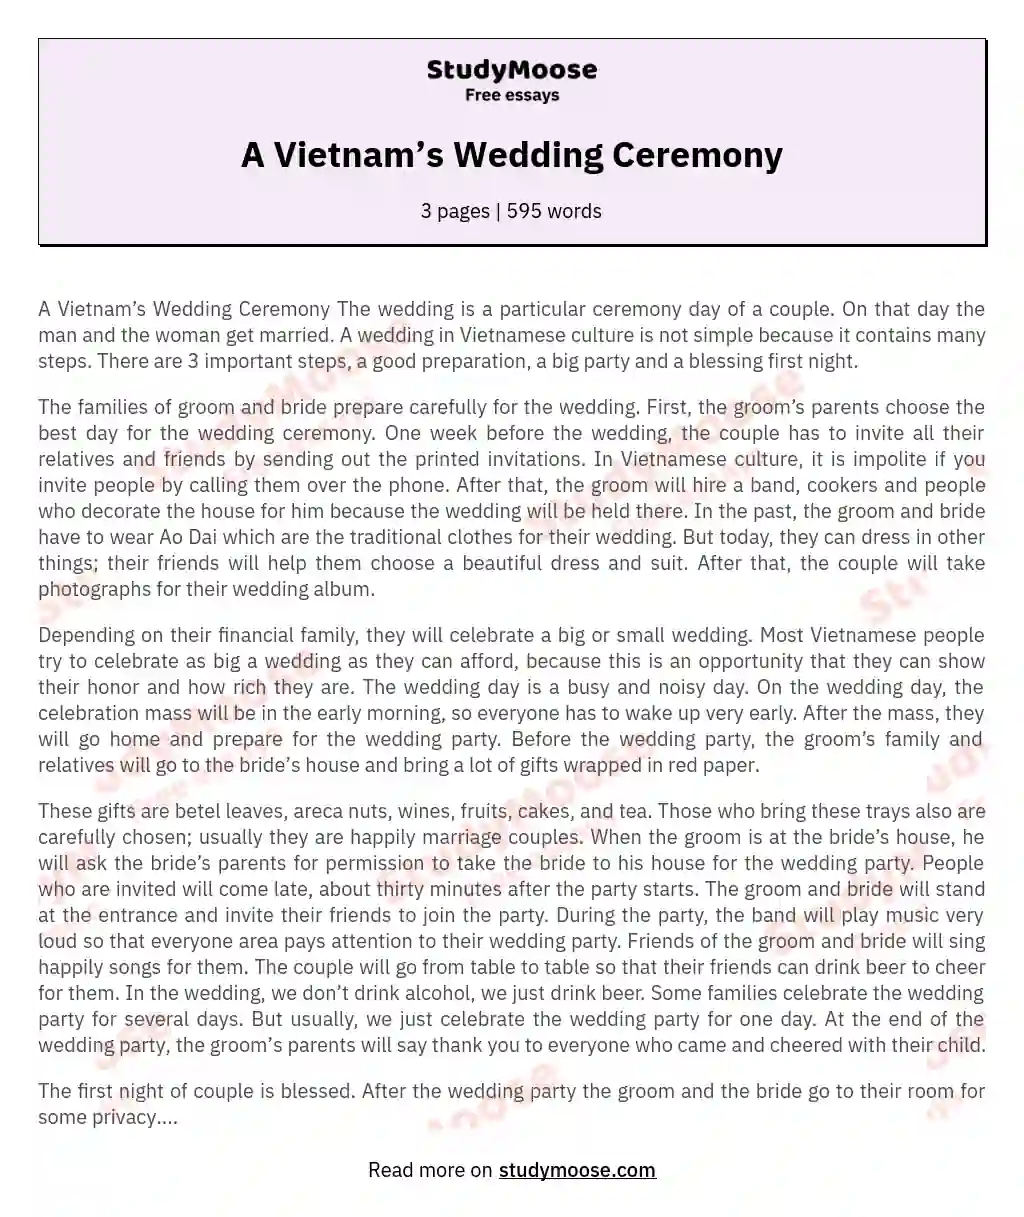 A Vietnam’s Wedding Ceremony essay